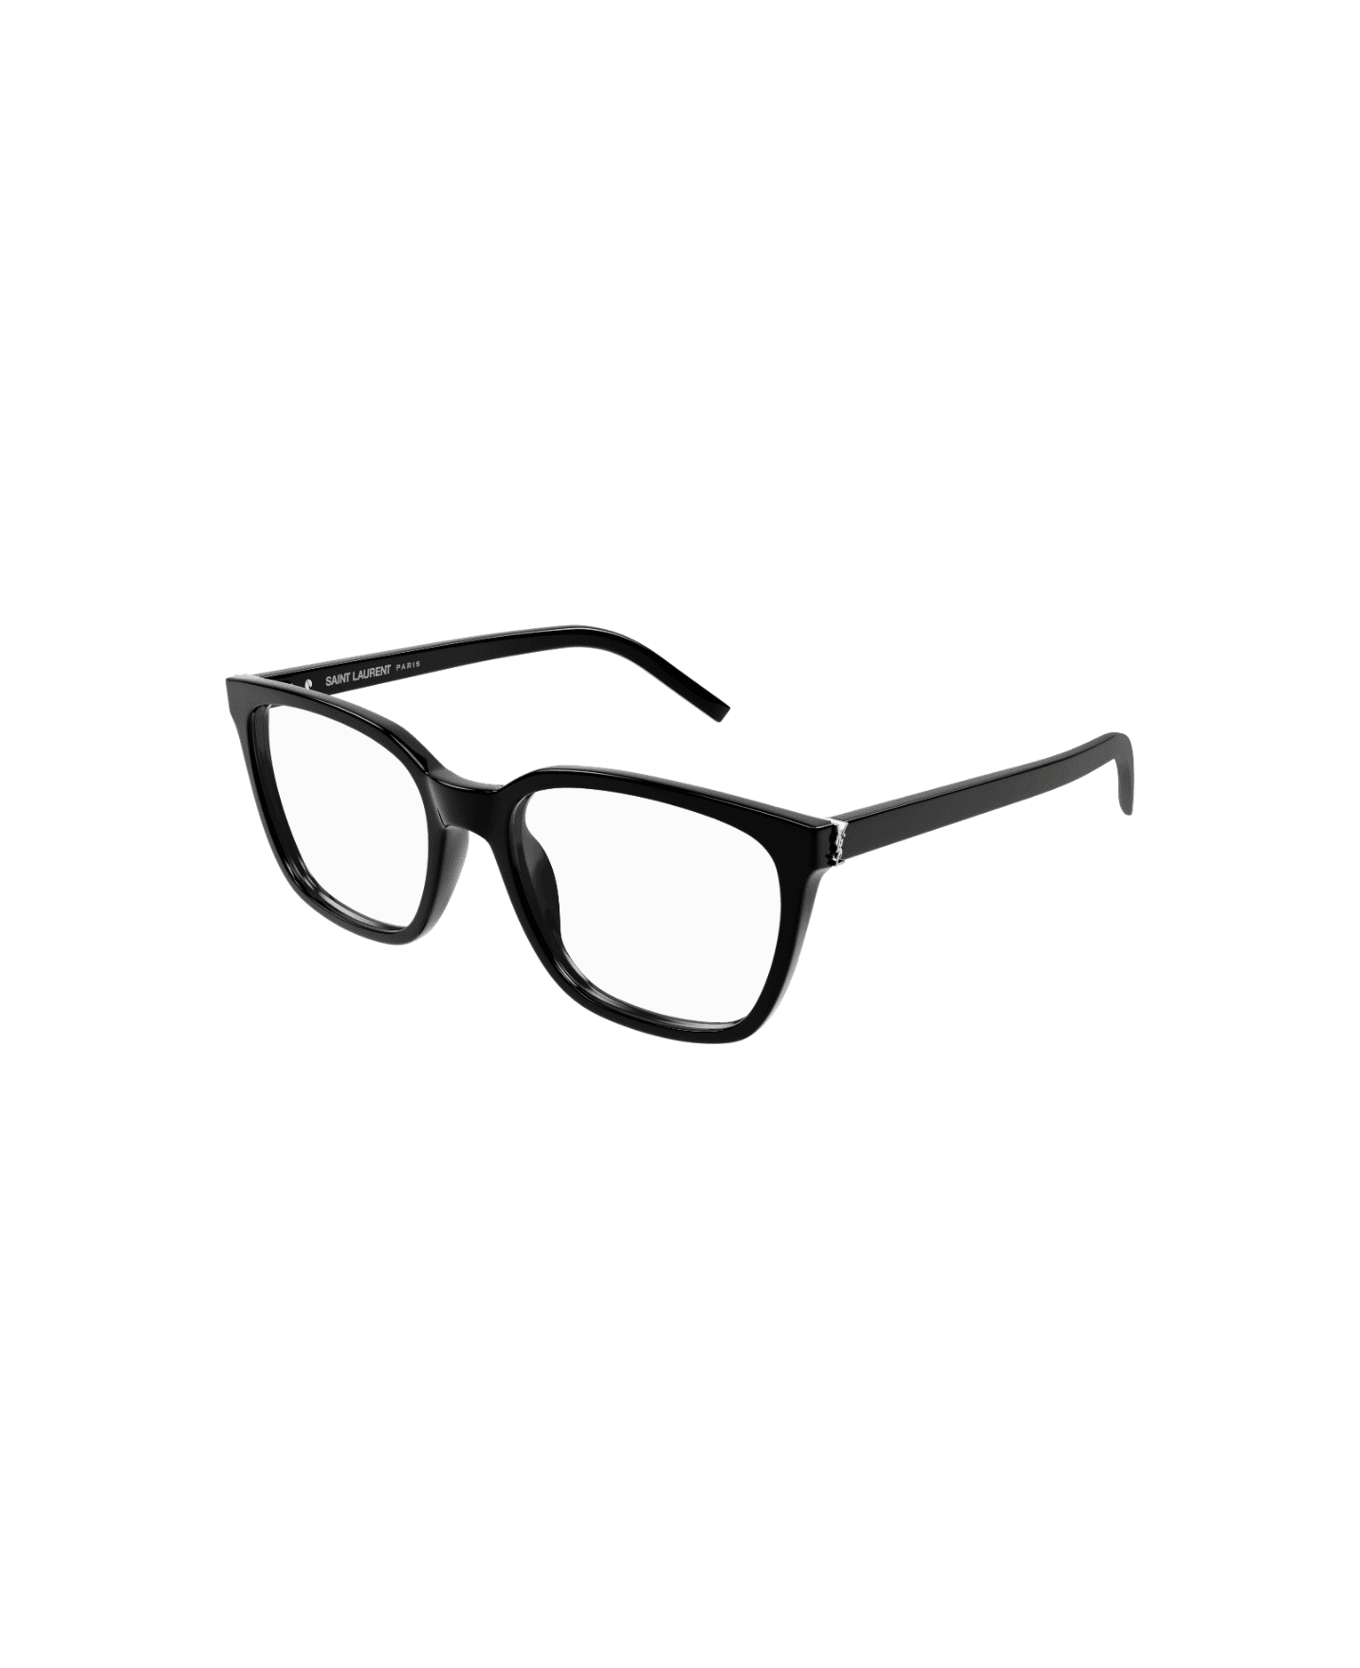 Saint Laurent Eyewear SL M129 001 Glasses